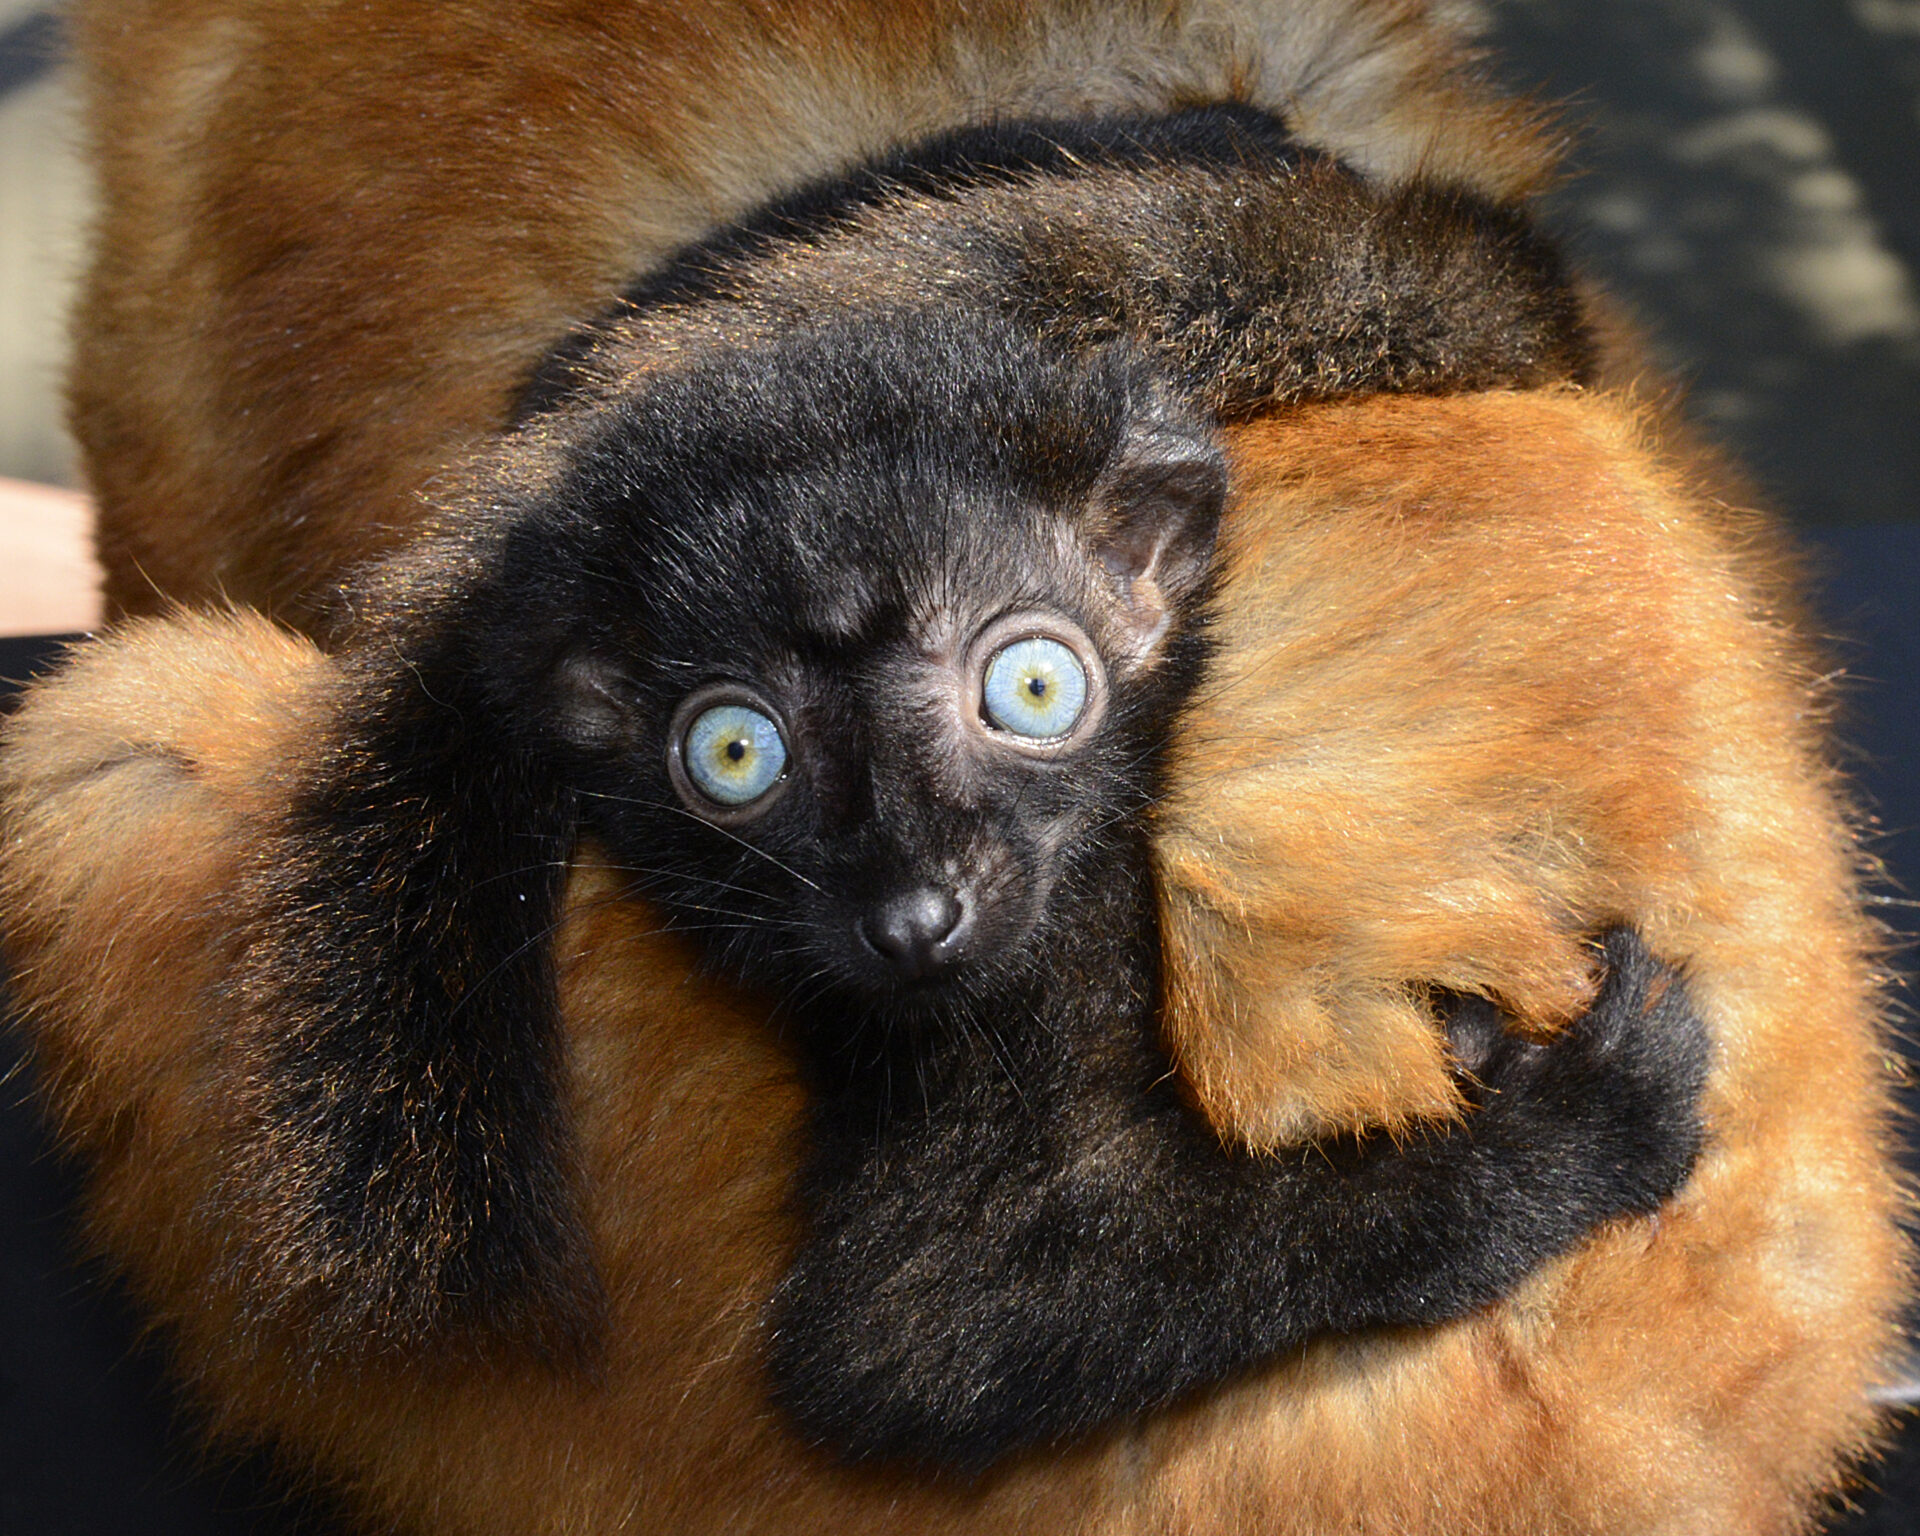 Black Lemur - The Other Blue-Eyed Primate 